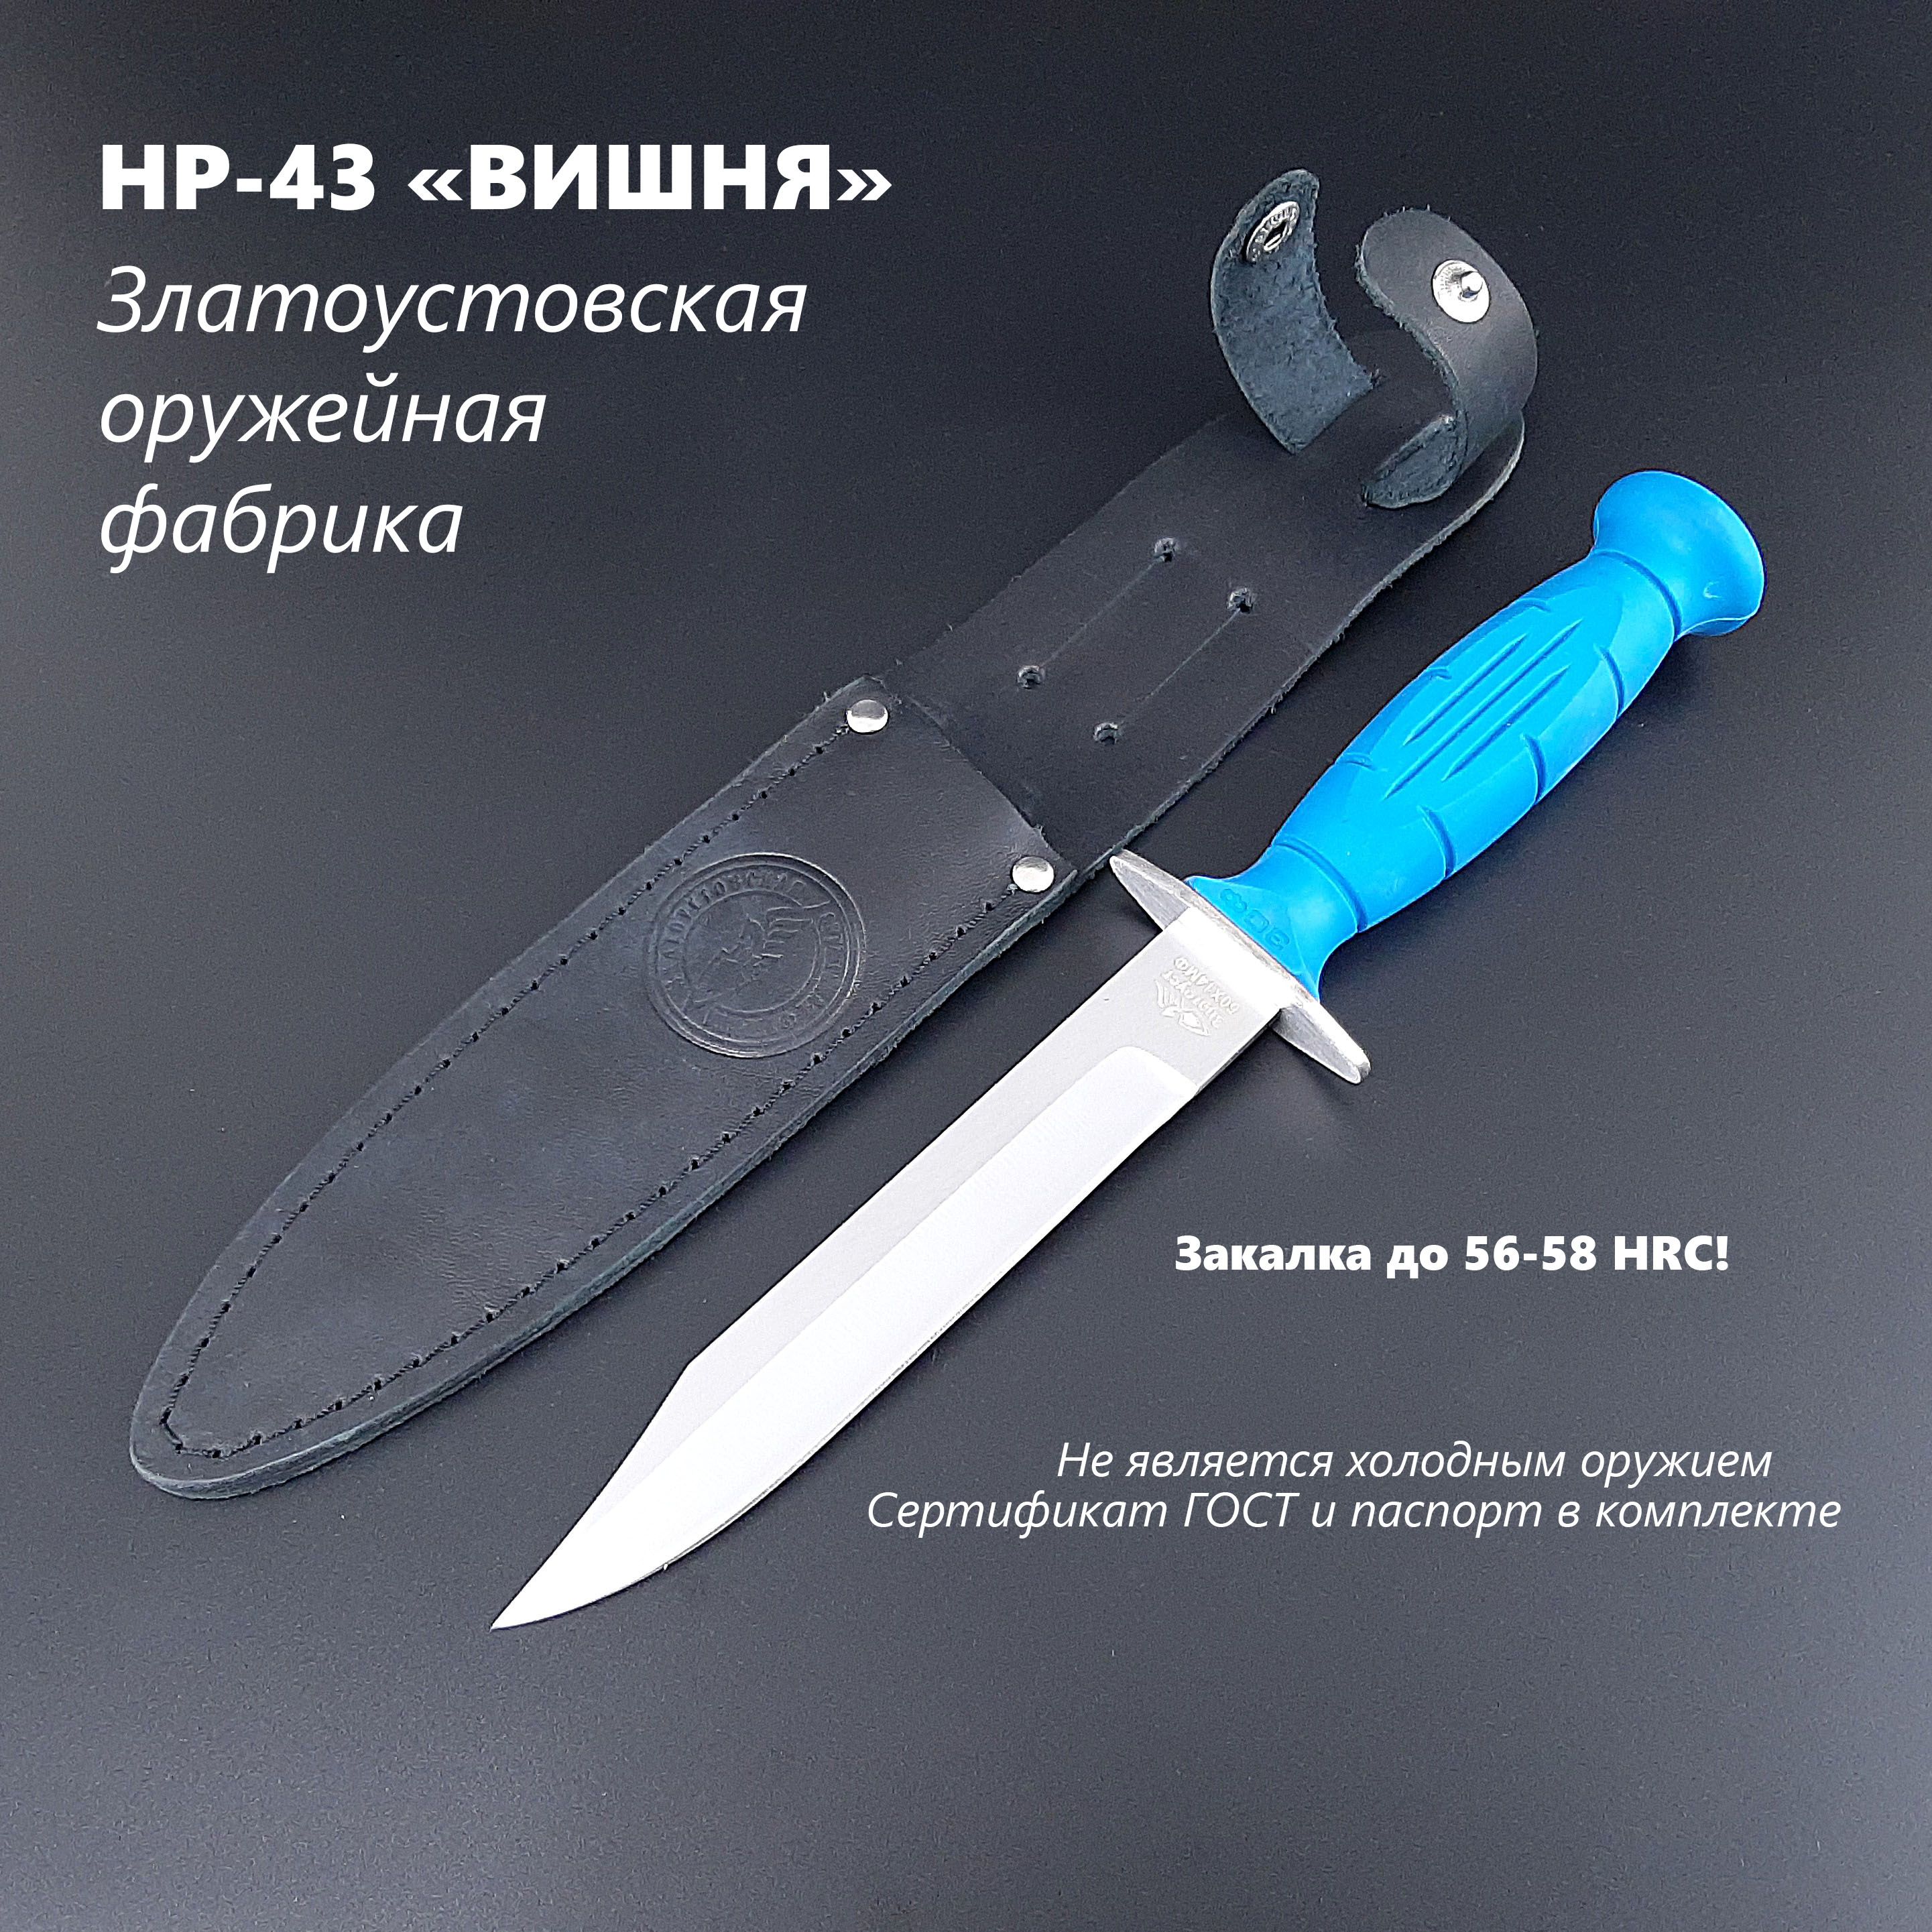 Материал на рукояти ножей | Кузнечный форум market-r.ru